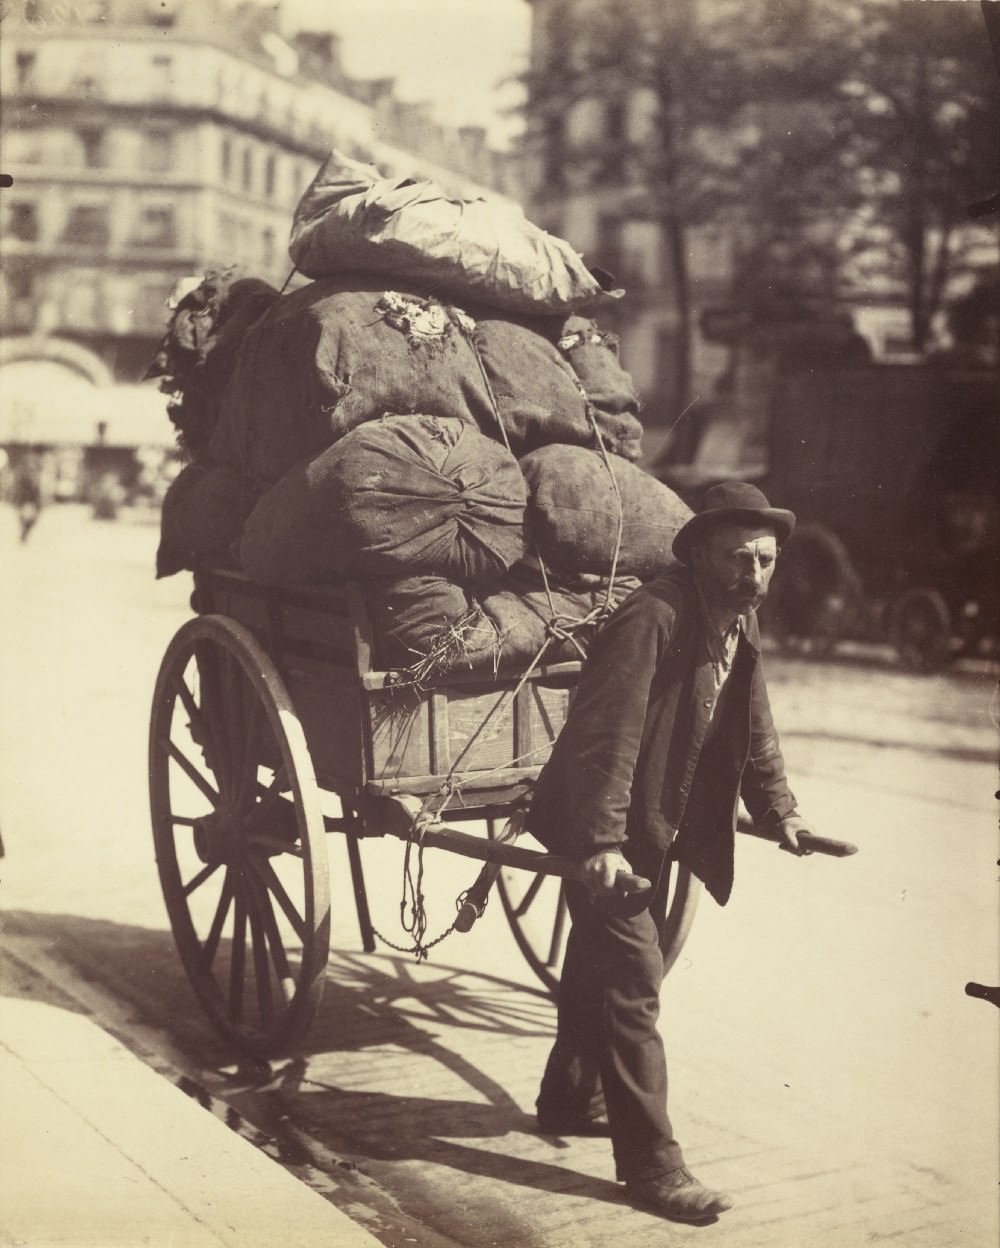 Rag picker, 1899.